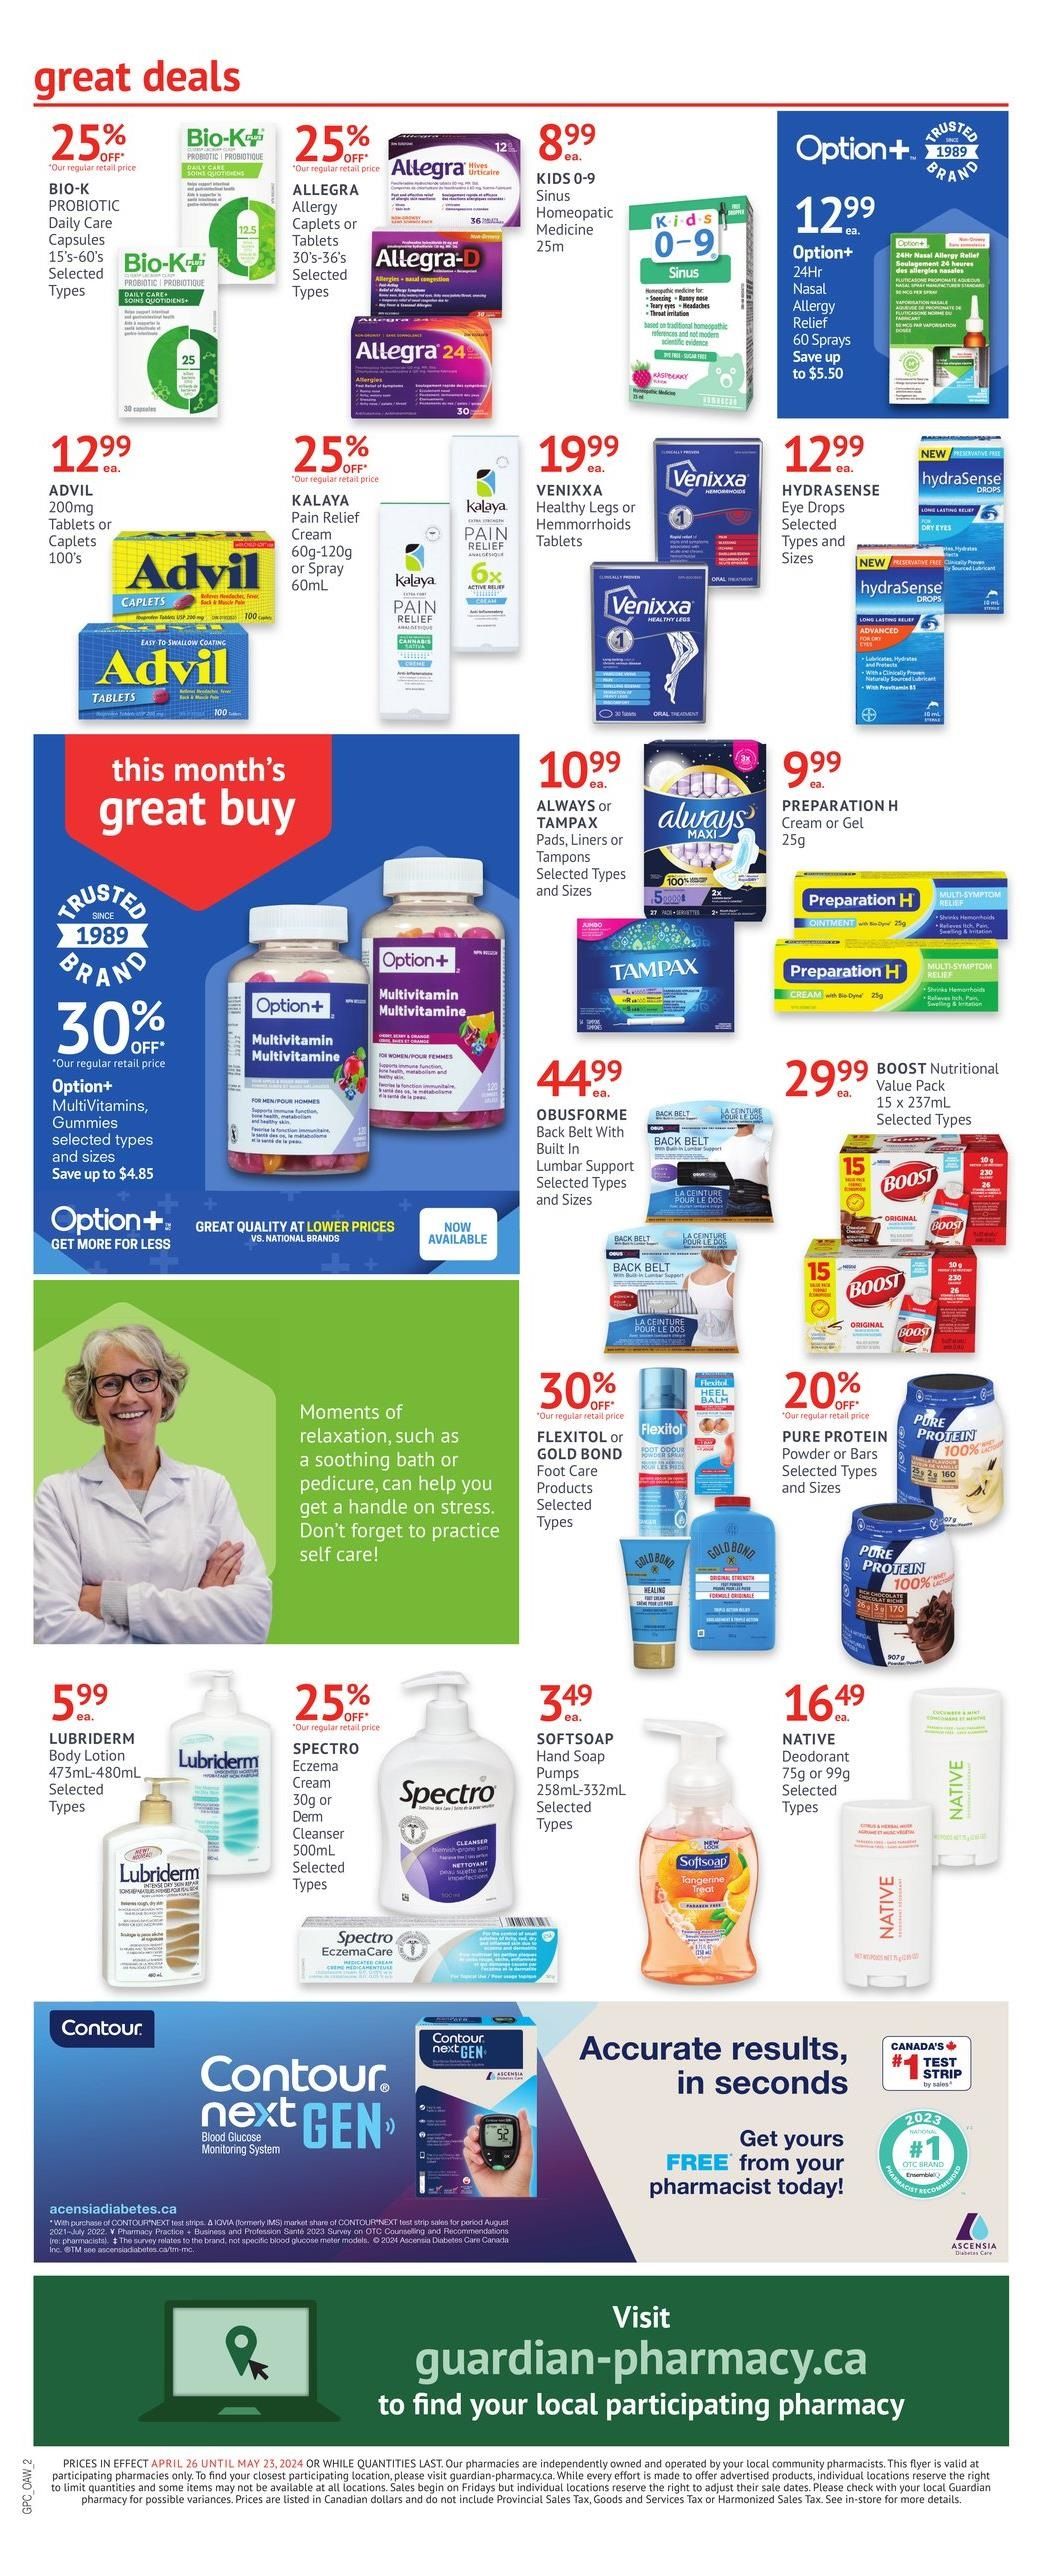 Guardian IDA Pharmacies - Monthly Savings - Page 2